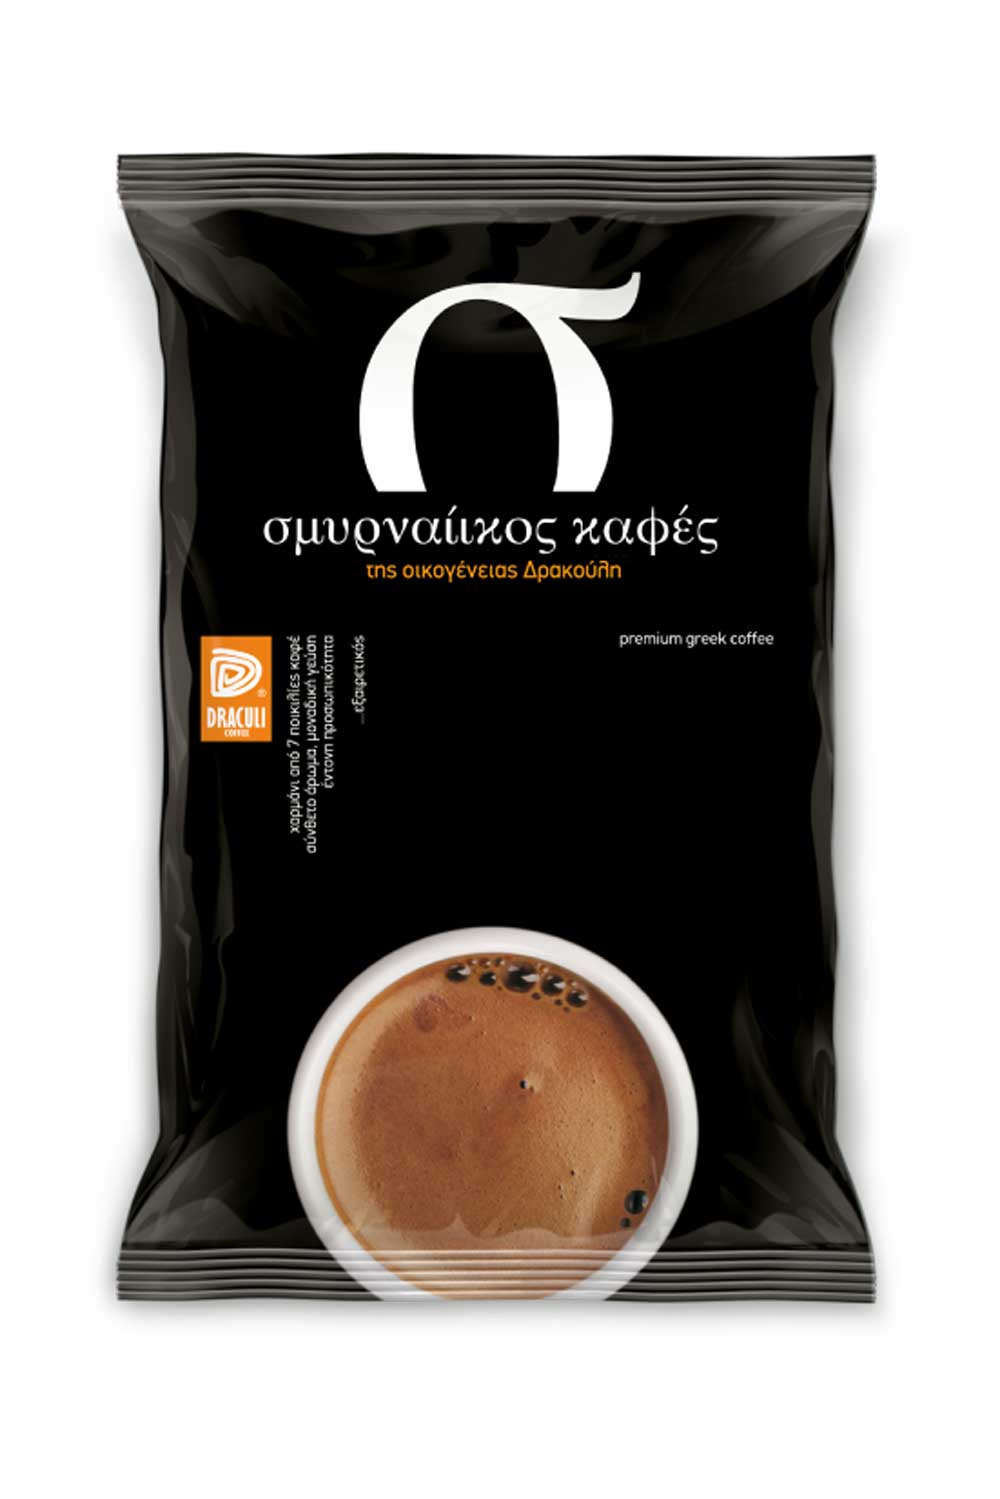 Premium Smyrneikos Kaffee 200g